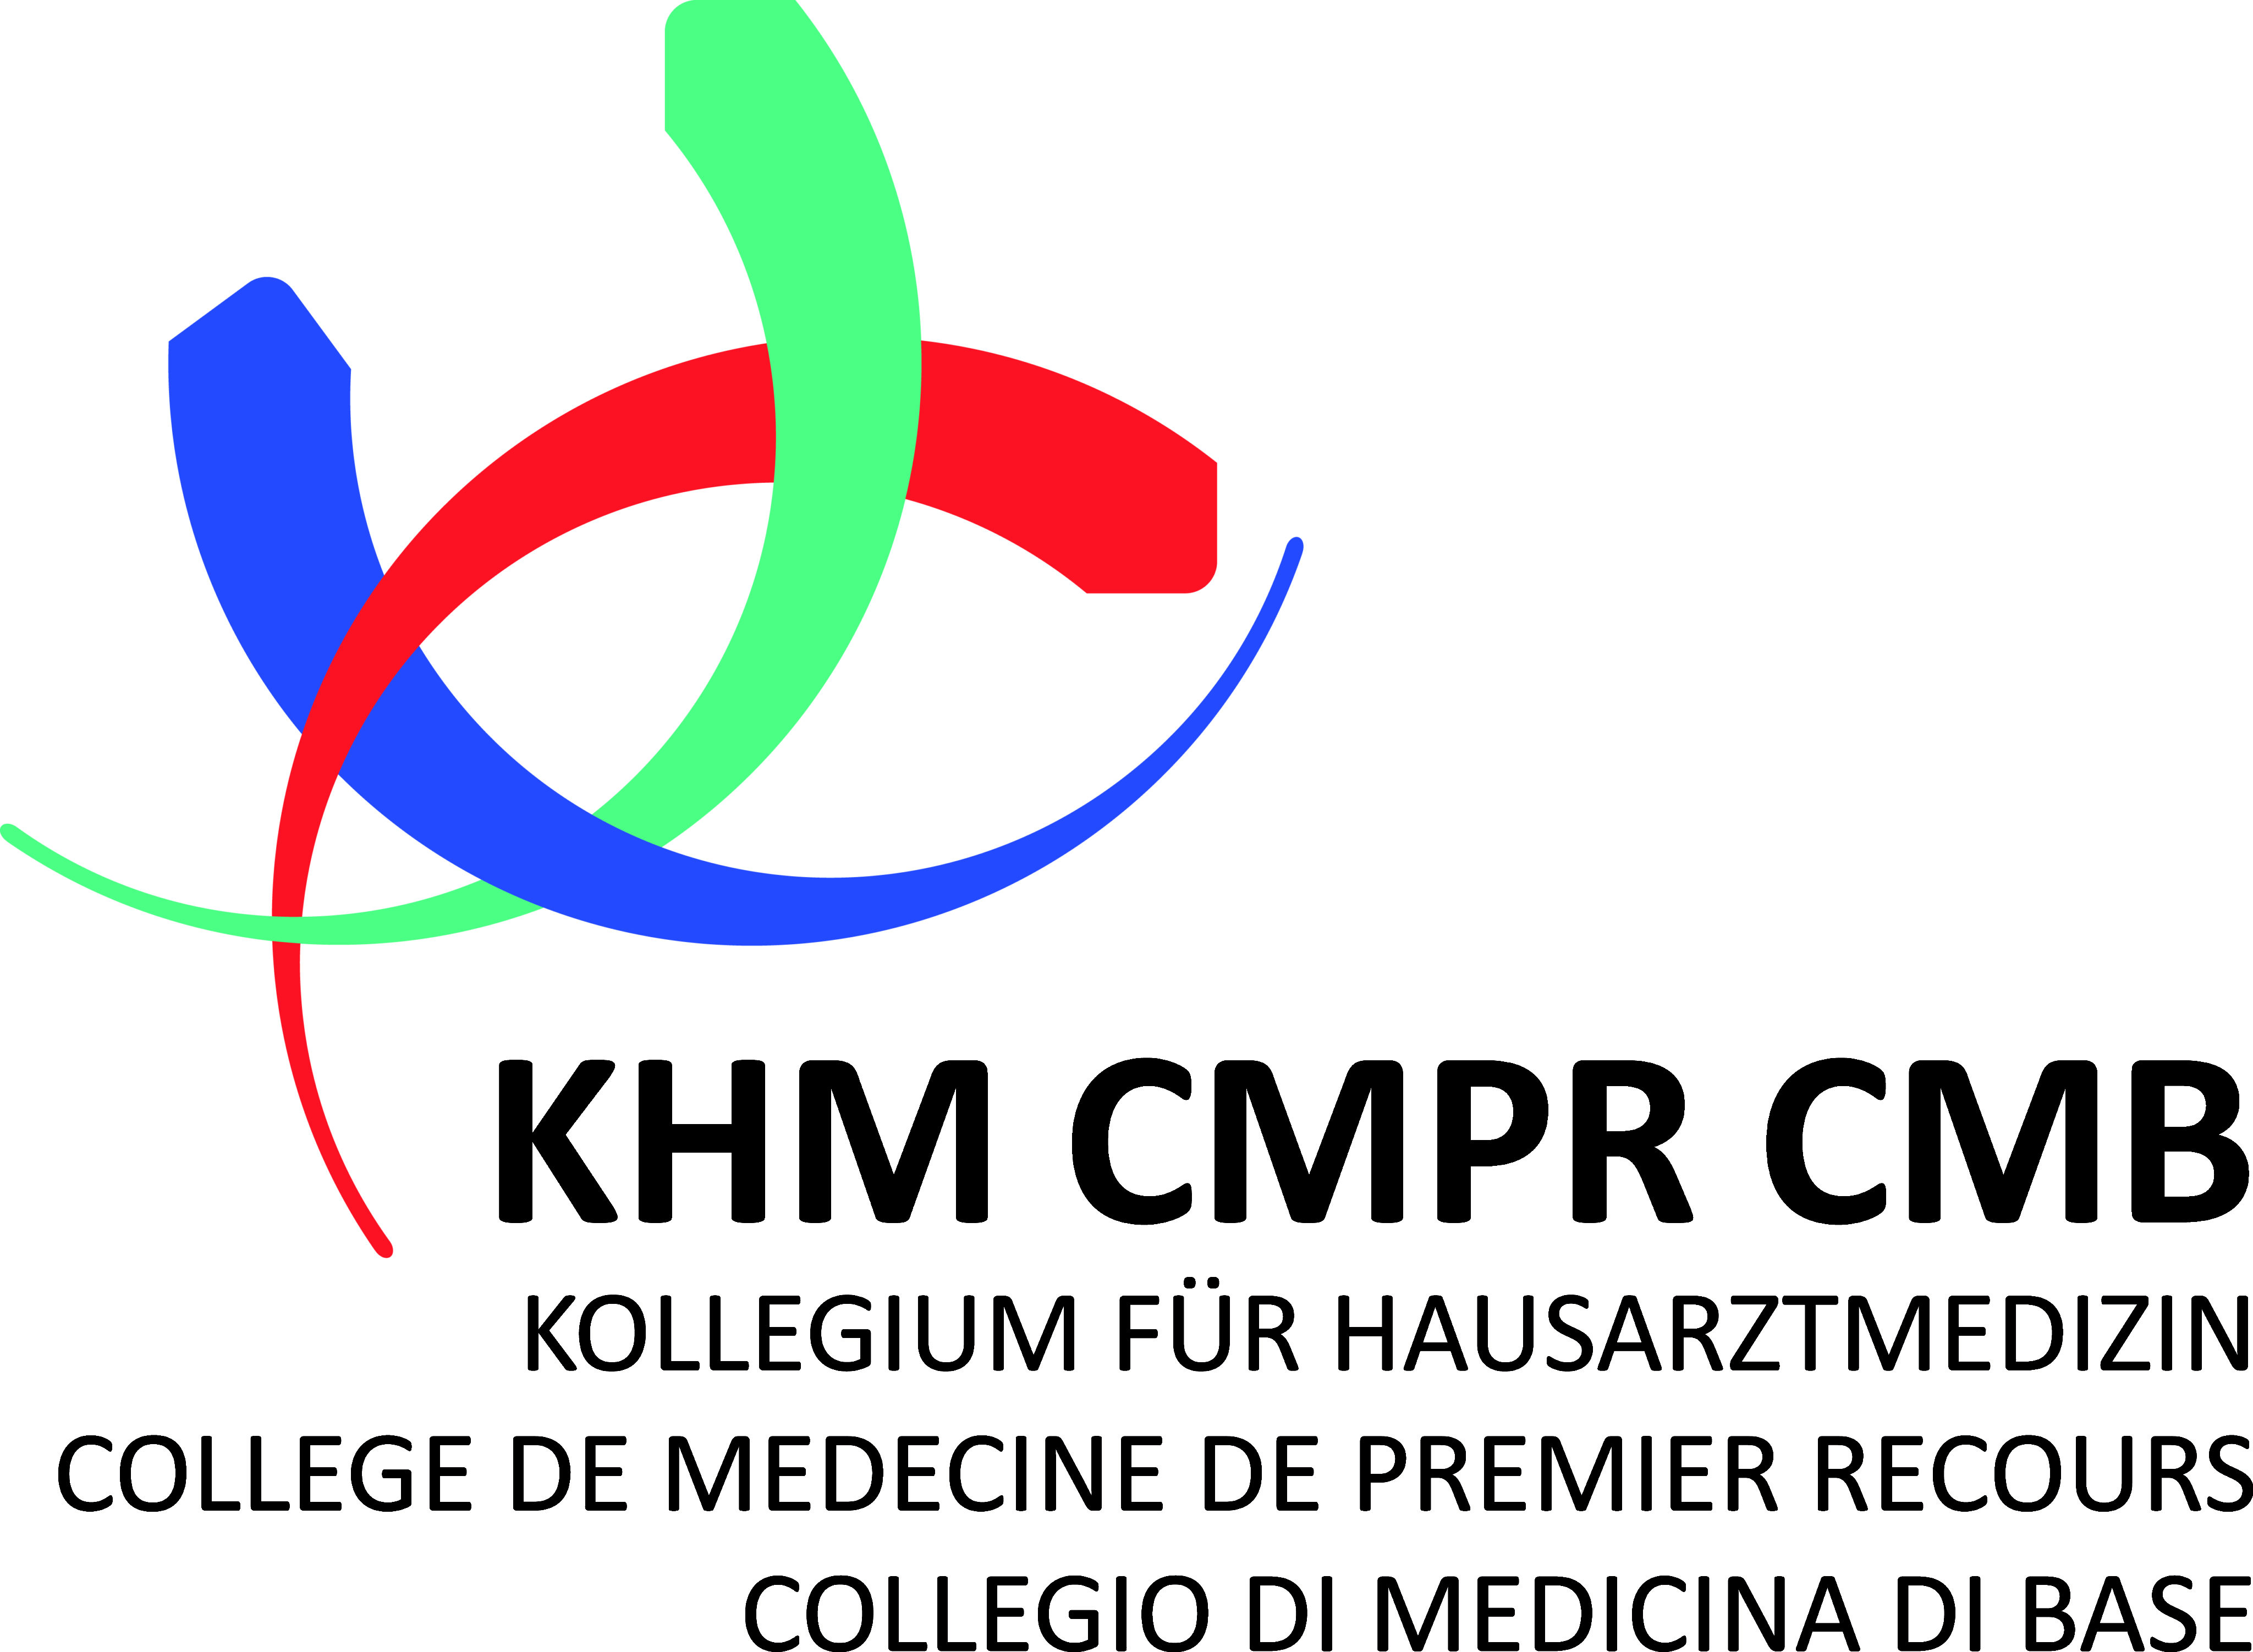 Kollegium für Hausarztmedizin (KHM)